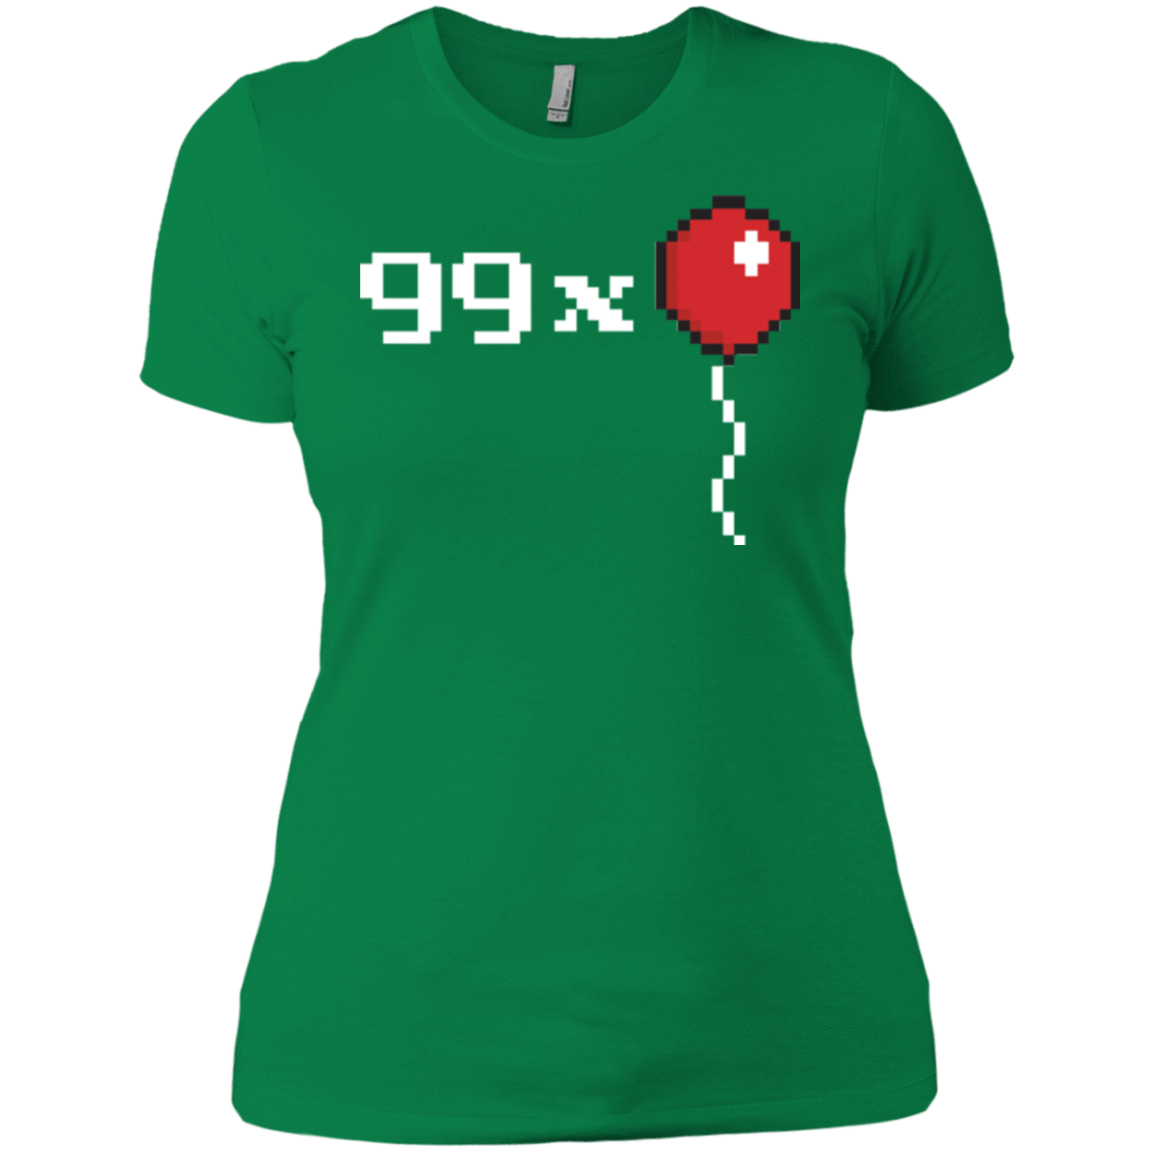 T-Shirts Kelly Green / X-Small 99x Balloon Women's Premium T-Shirt